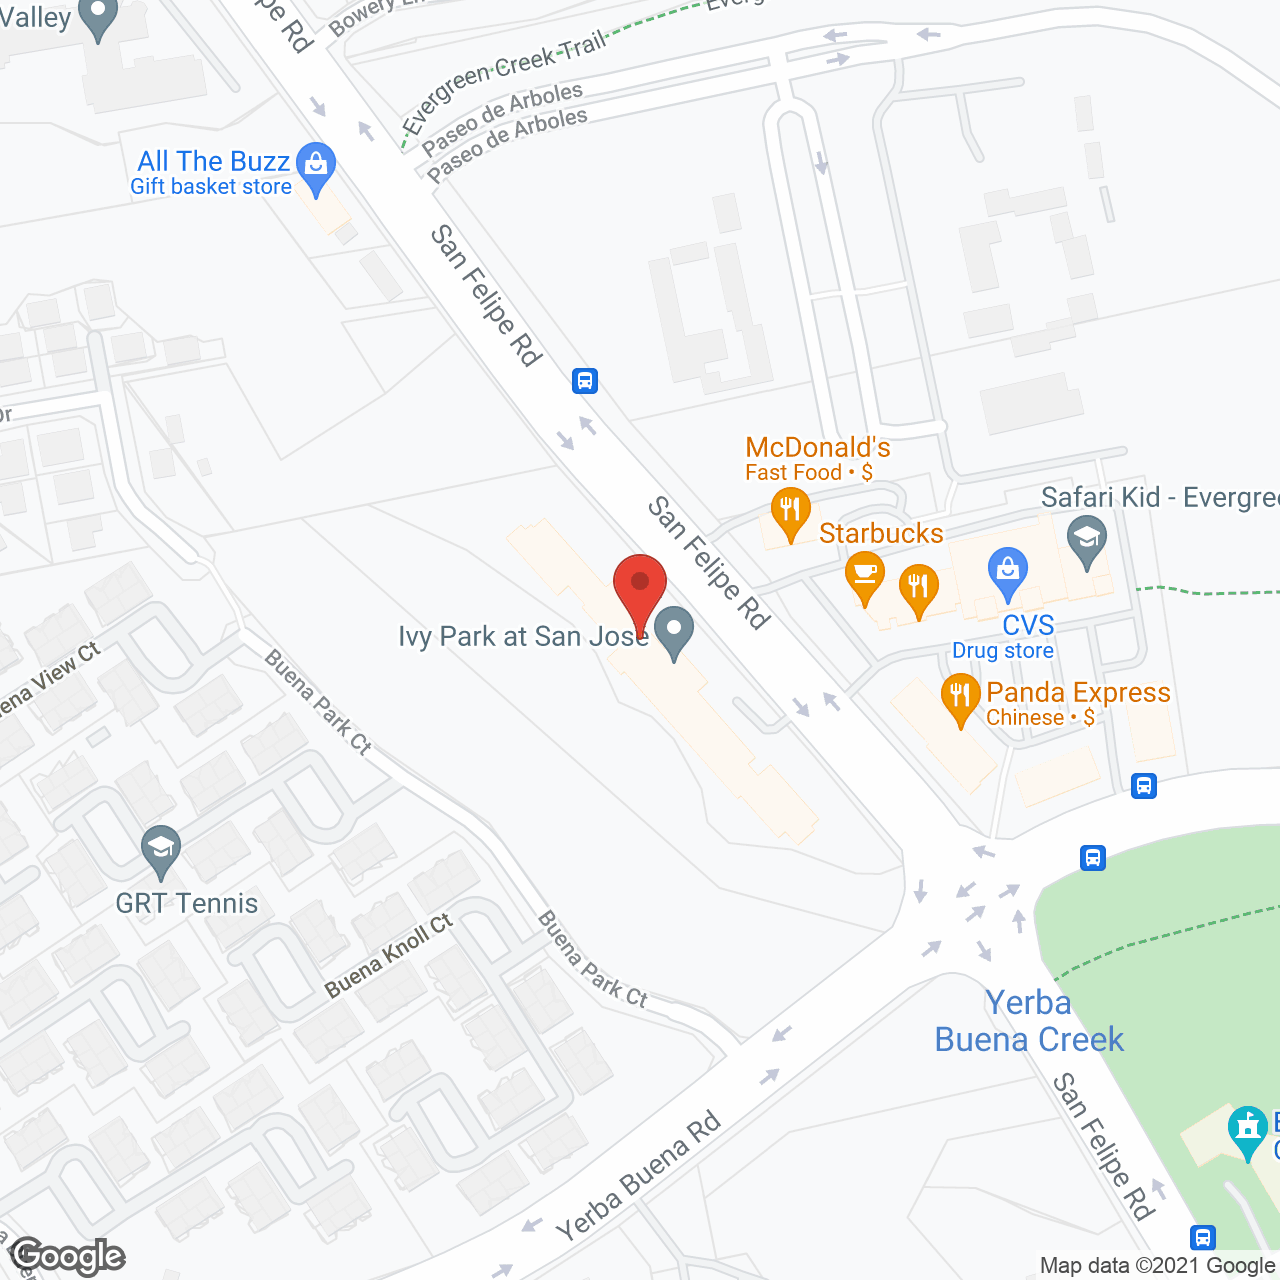 Ivy Park at San Jose in google map